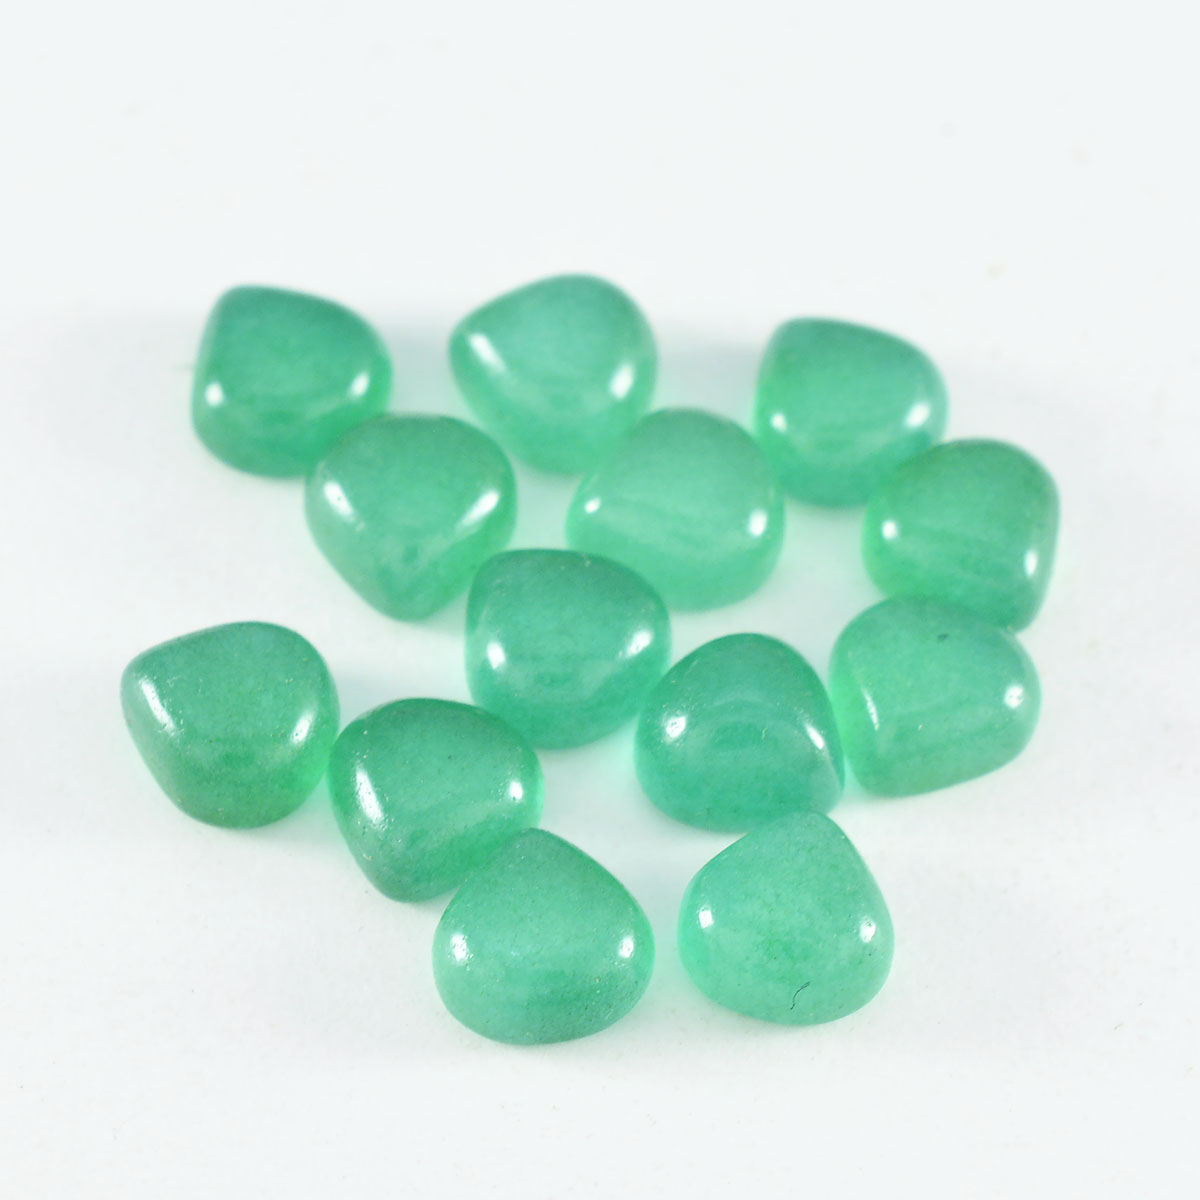 Riyogems 1PC groene onyx cabochon 7x7 mm hartvorm knappe kwaliteit losse edelsteen